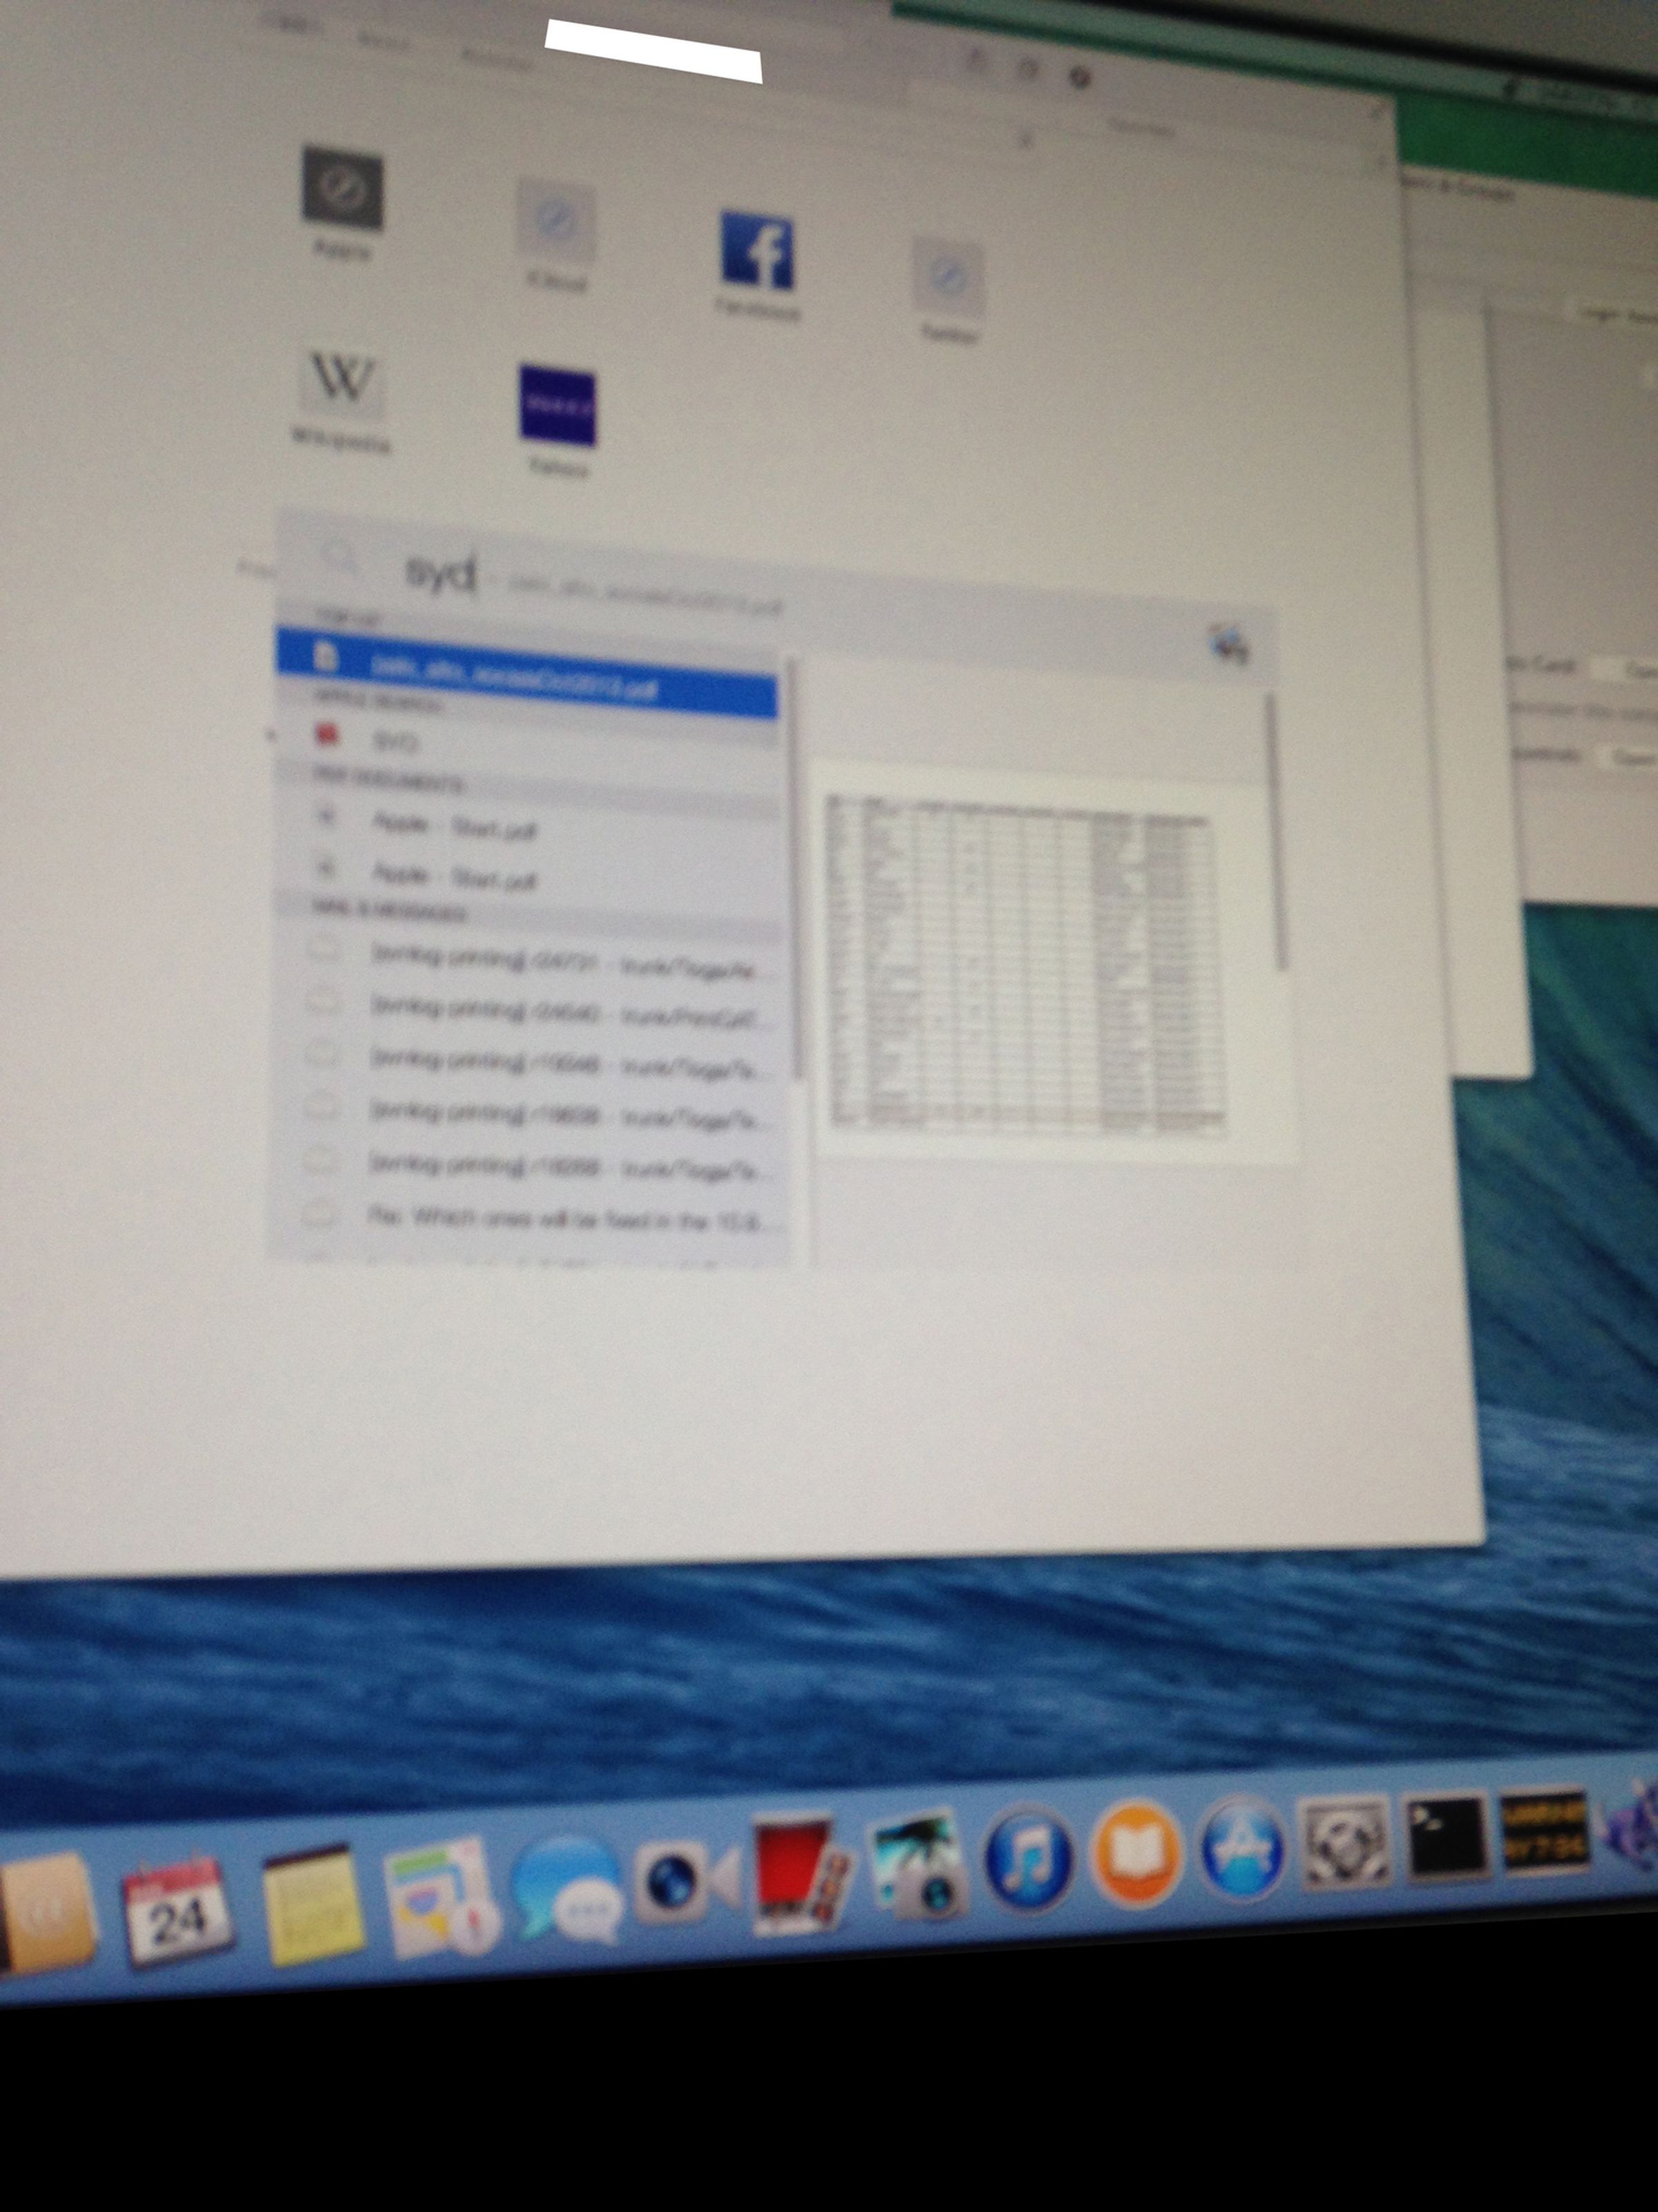 Leaked OS X 10.10 screenshots